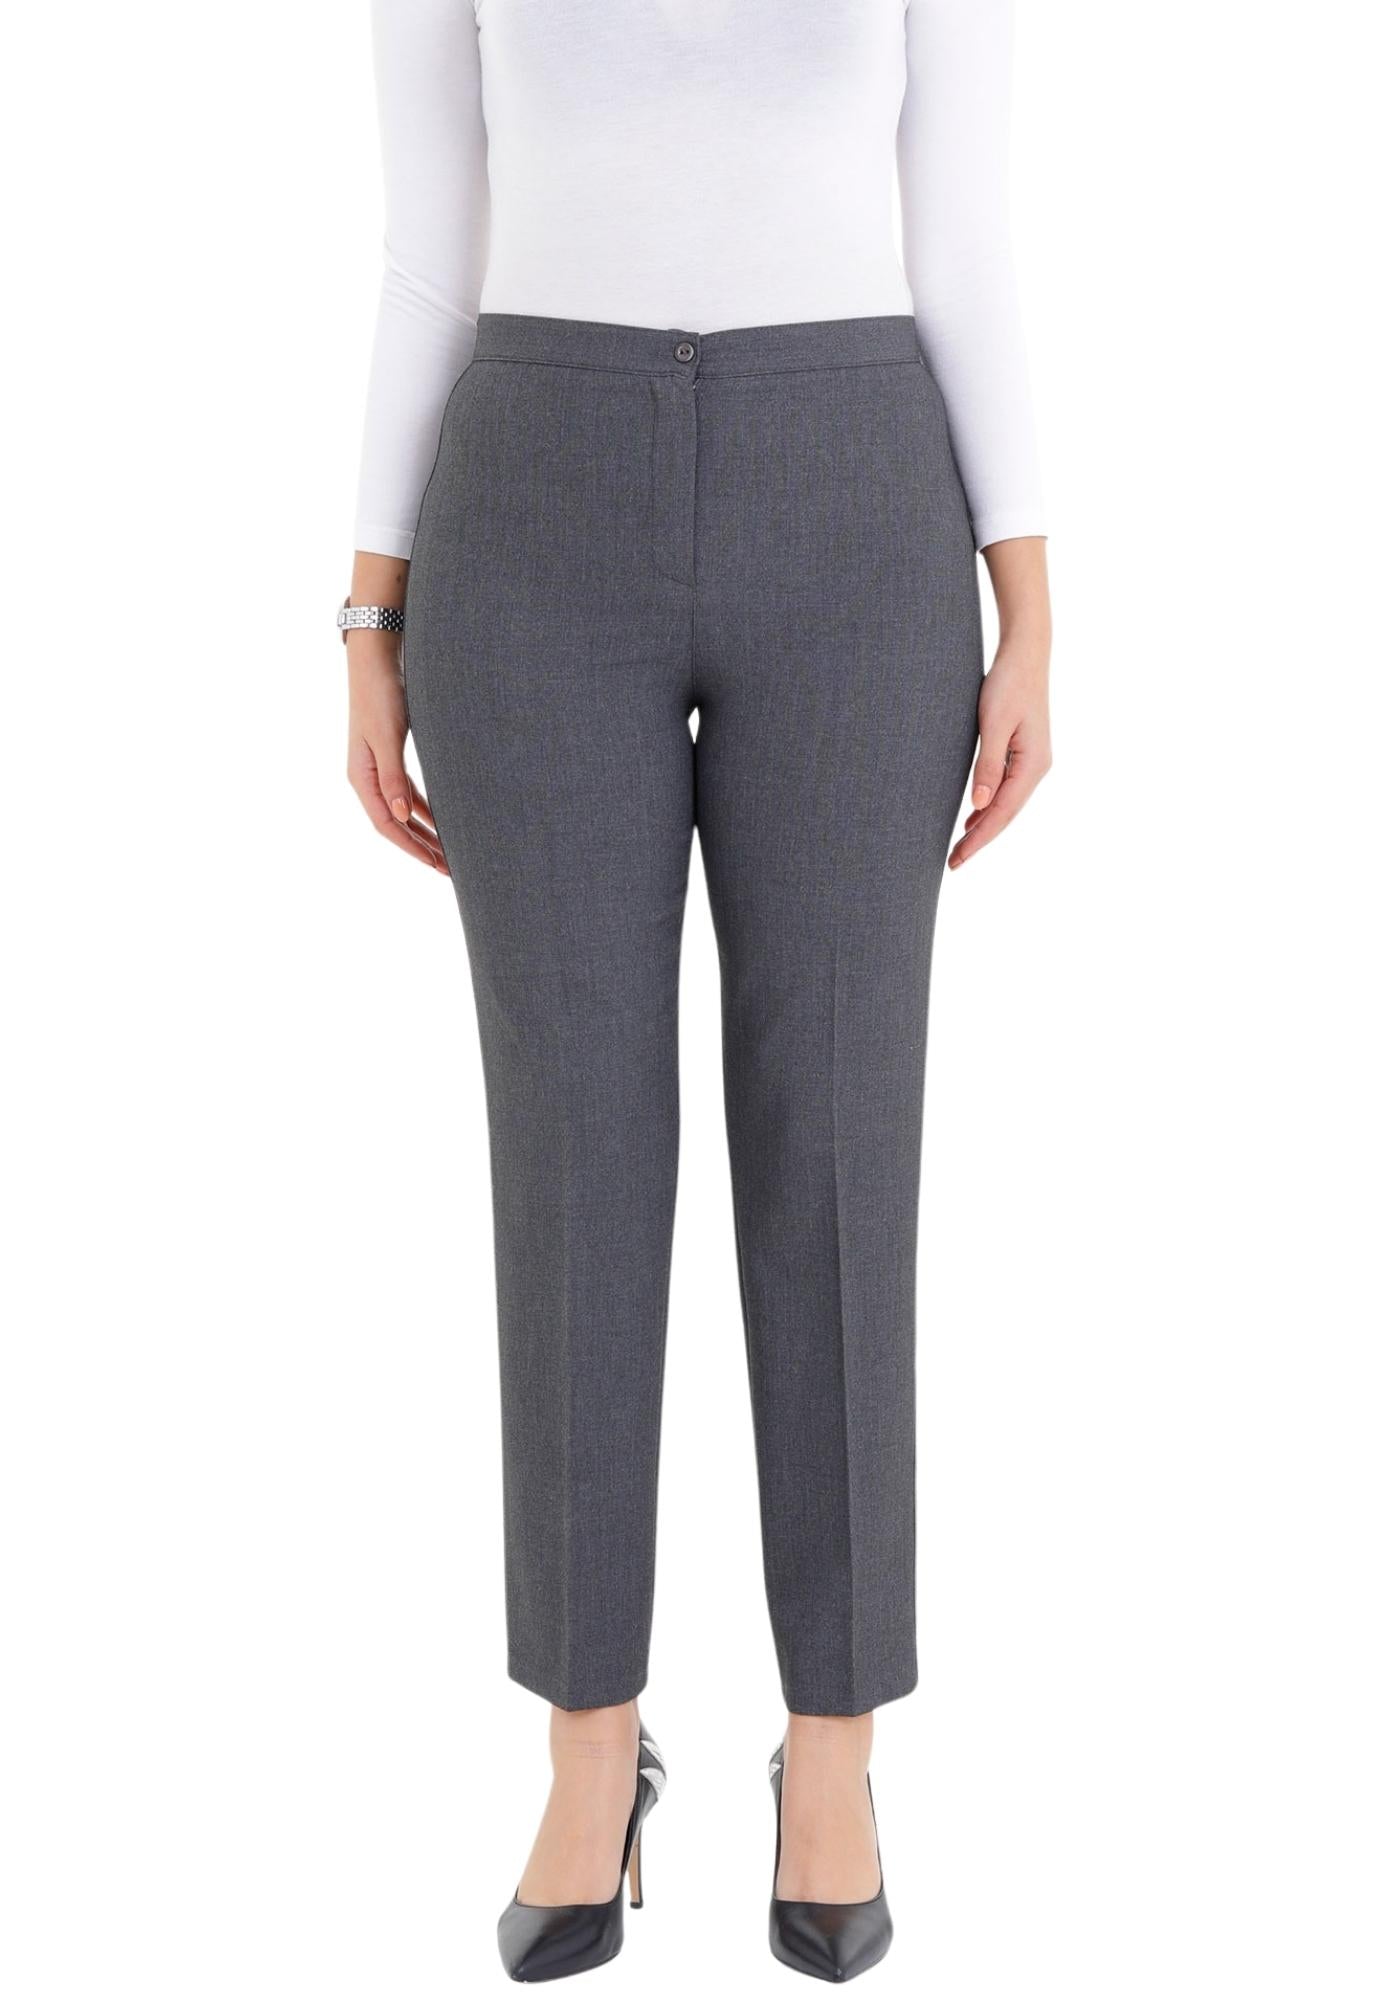 G-Line Women's Grey High Waist Slim Fit Stretchy Skinny Work Pants